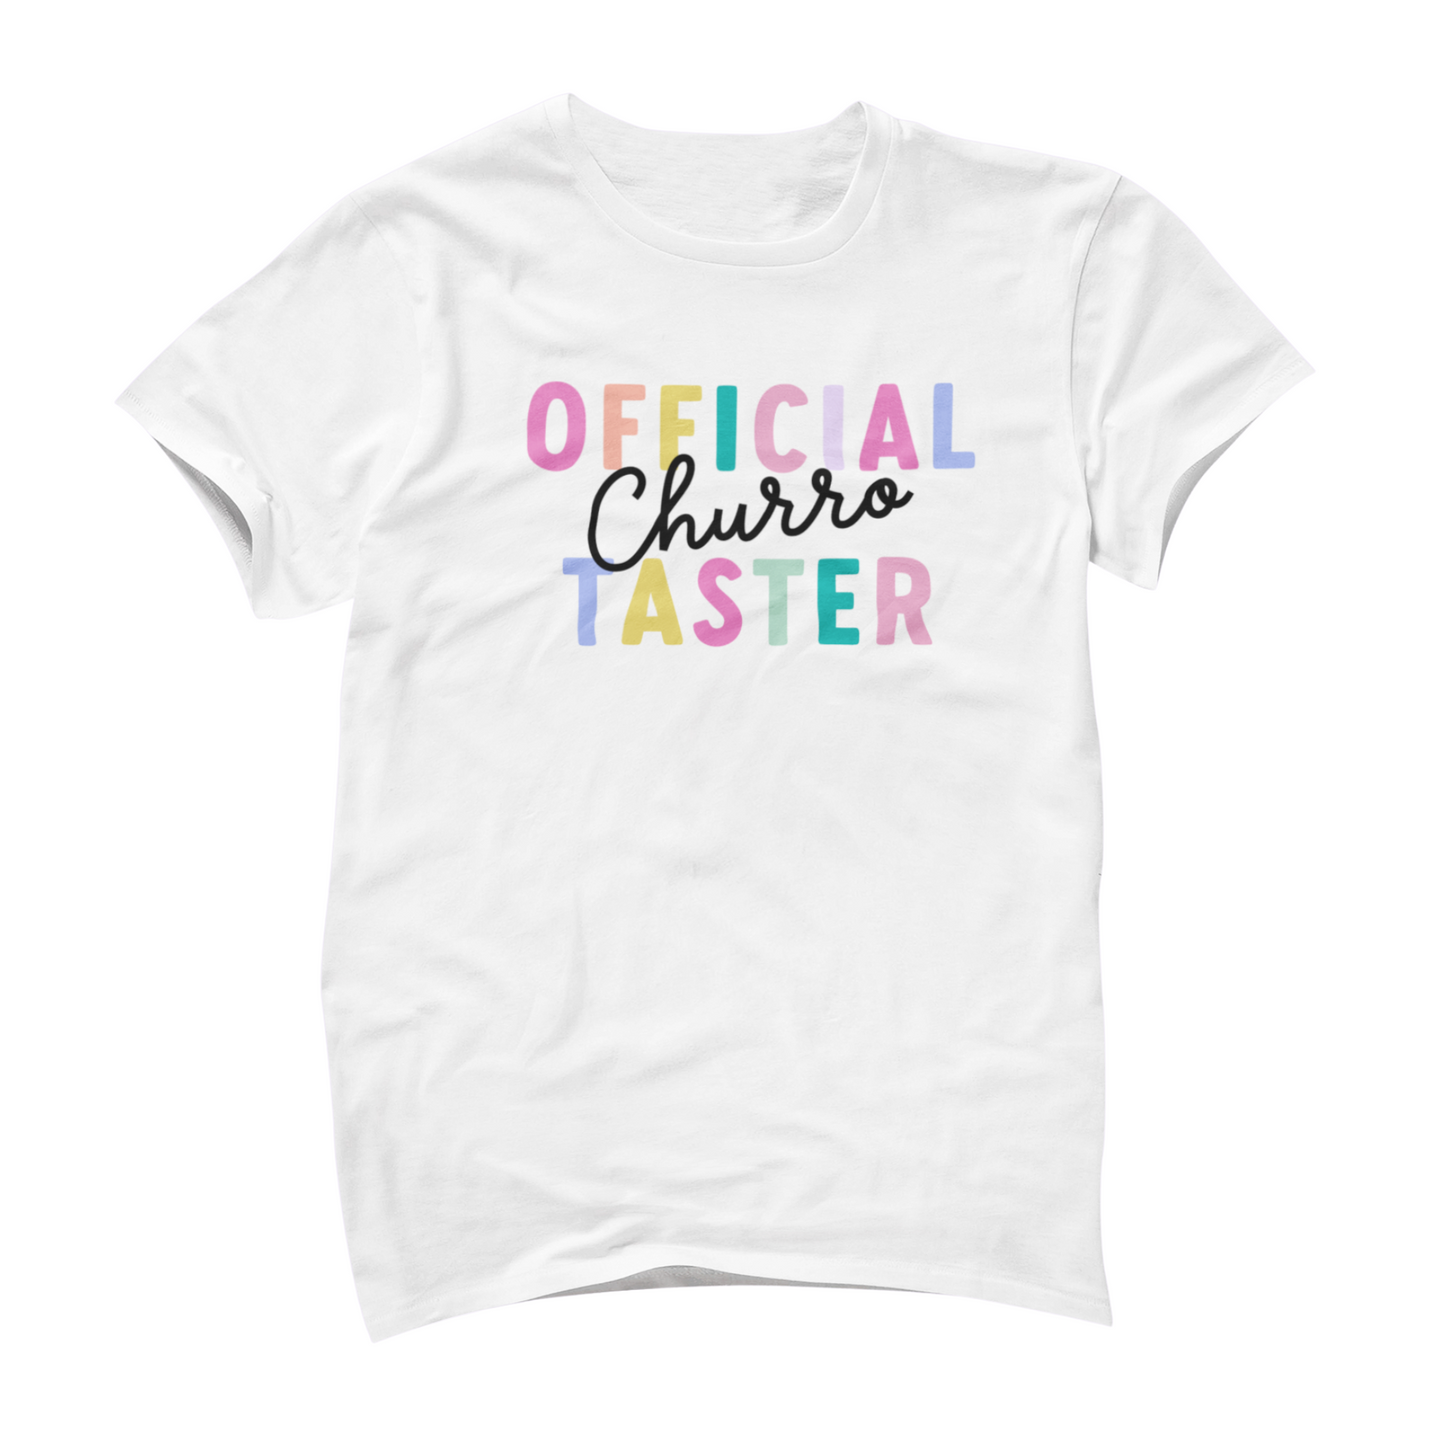 Official Churro Taster Shirt